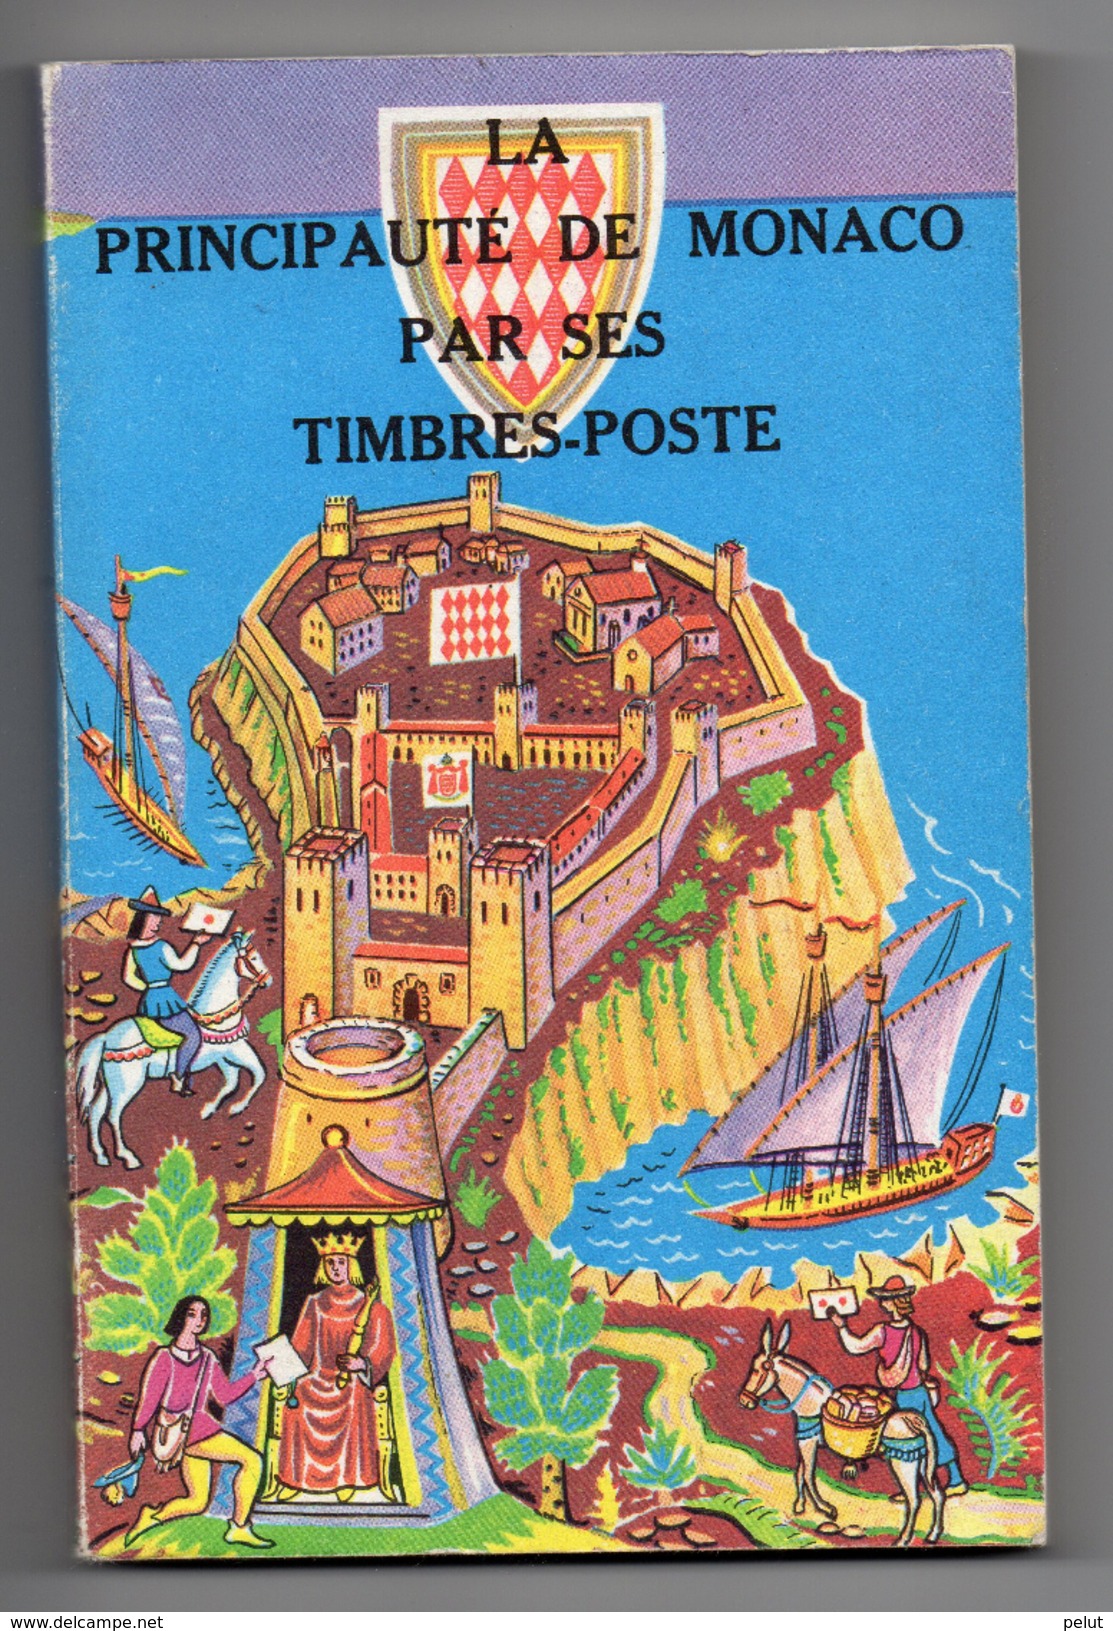 La Principauté De Monaco Par Ses Timbres-poste, édition 1972 Par H. Chiavassa - Filatelia E Historia De Correos